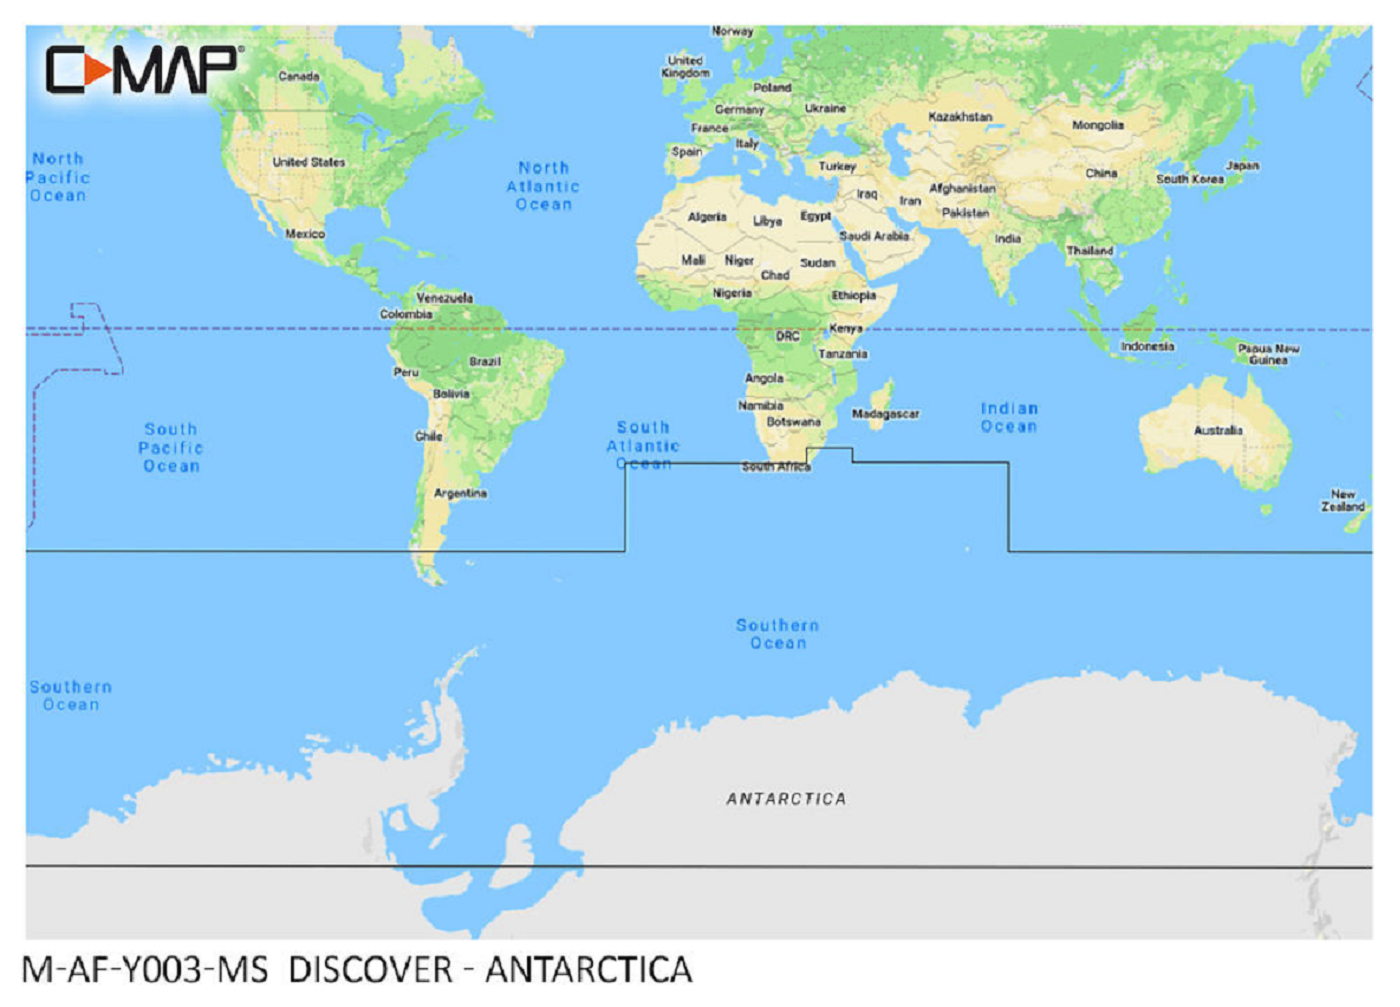 C-MAP Discover Antarctica  M-AF-Y003-MS